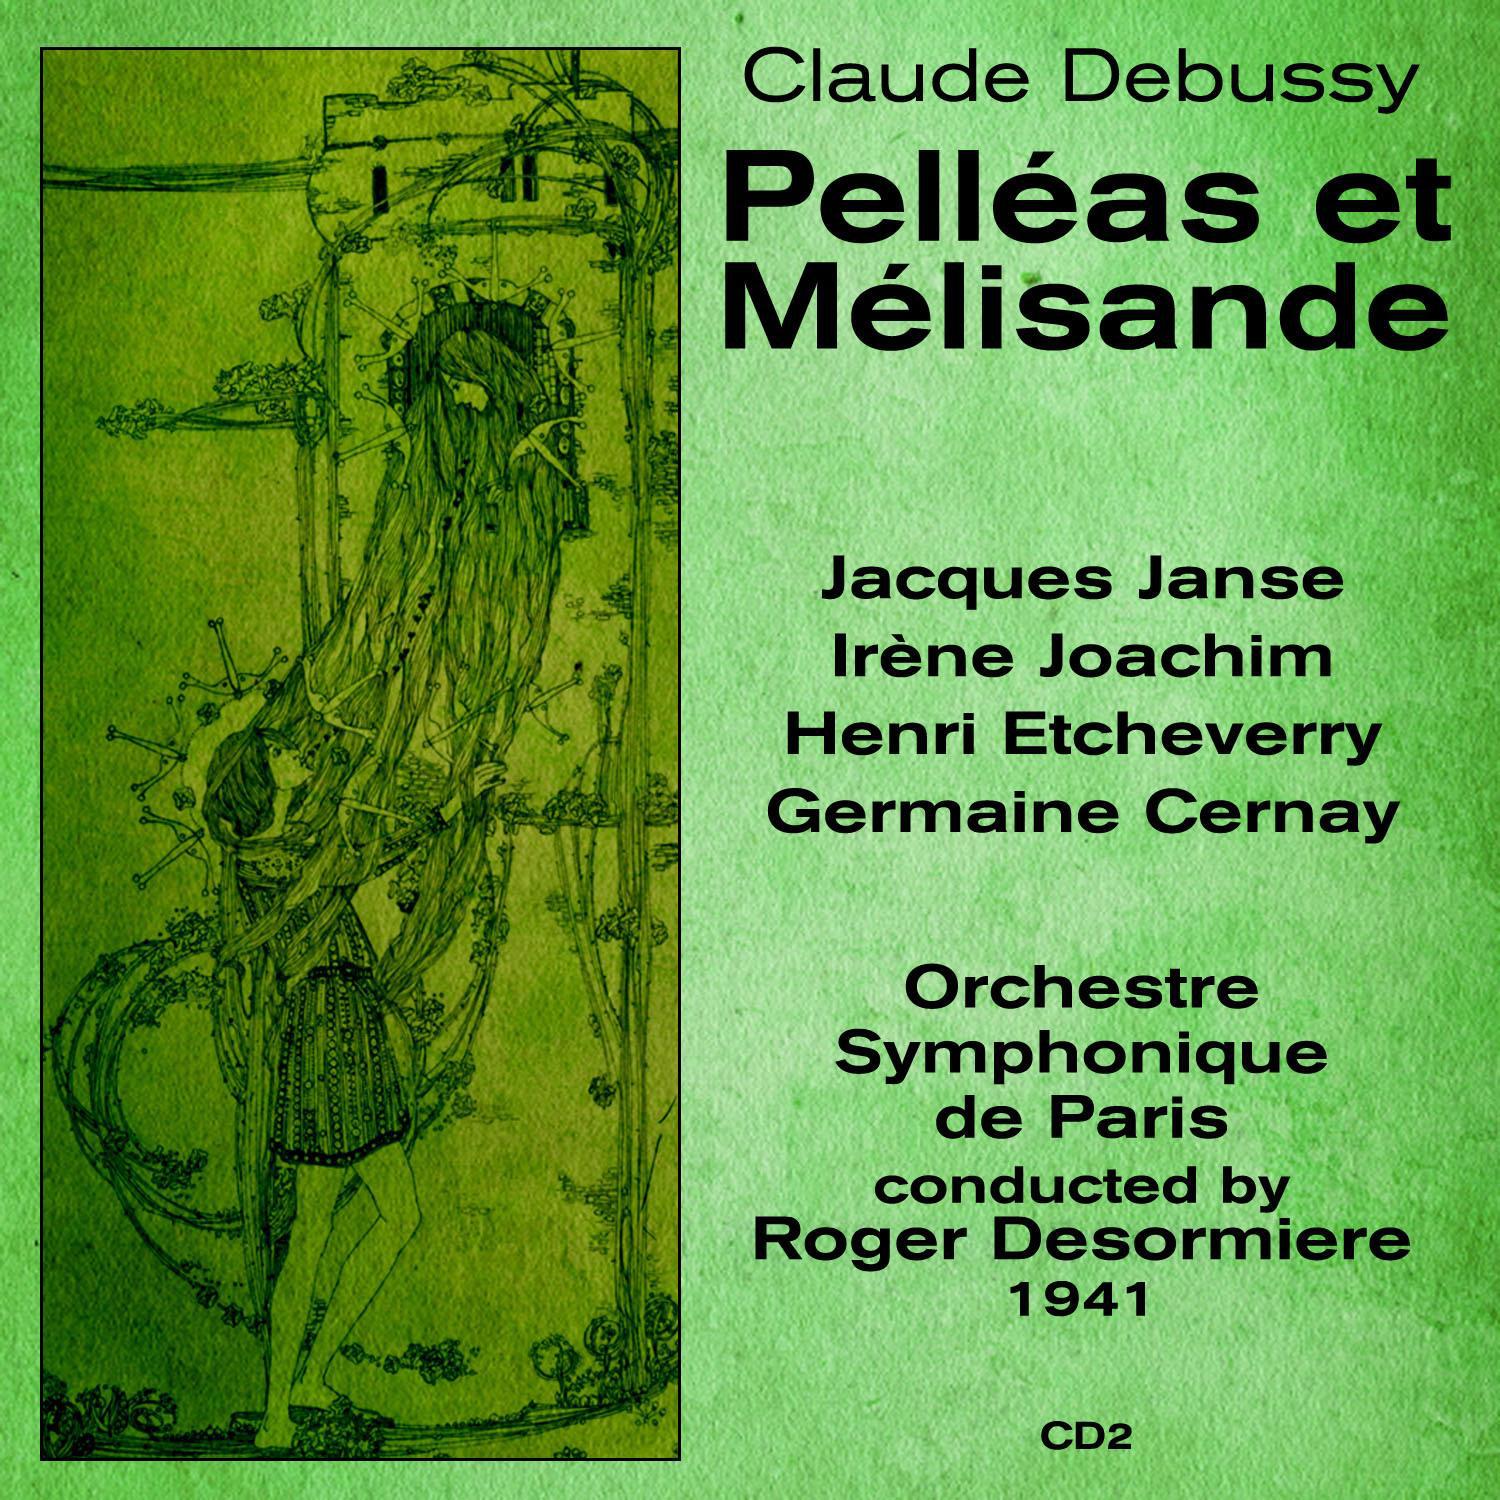 Claude Debussy: Pelléas et Mélisande (1941), Volume 2